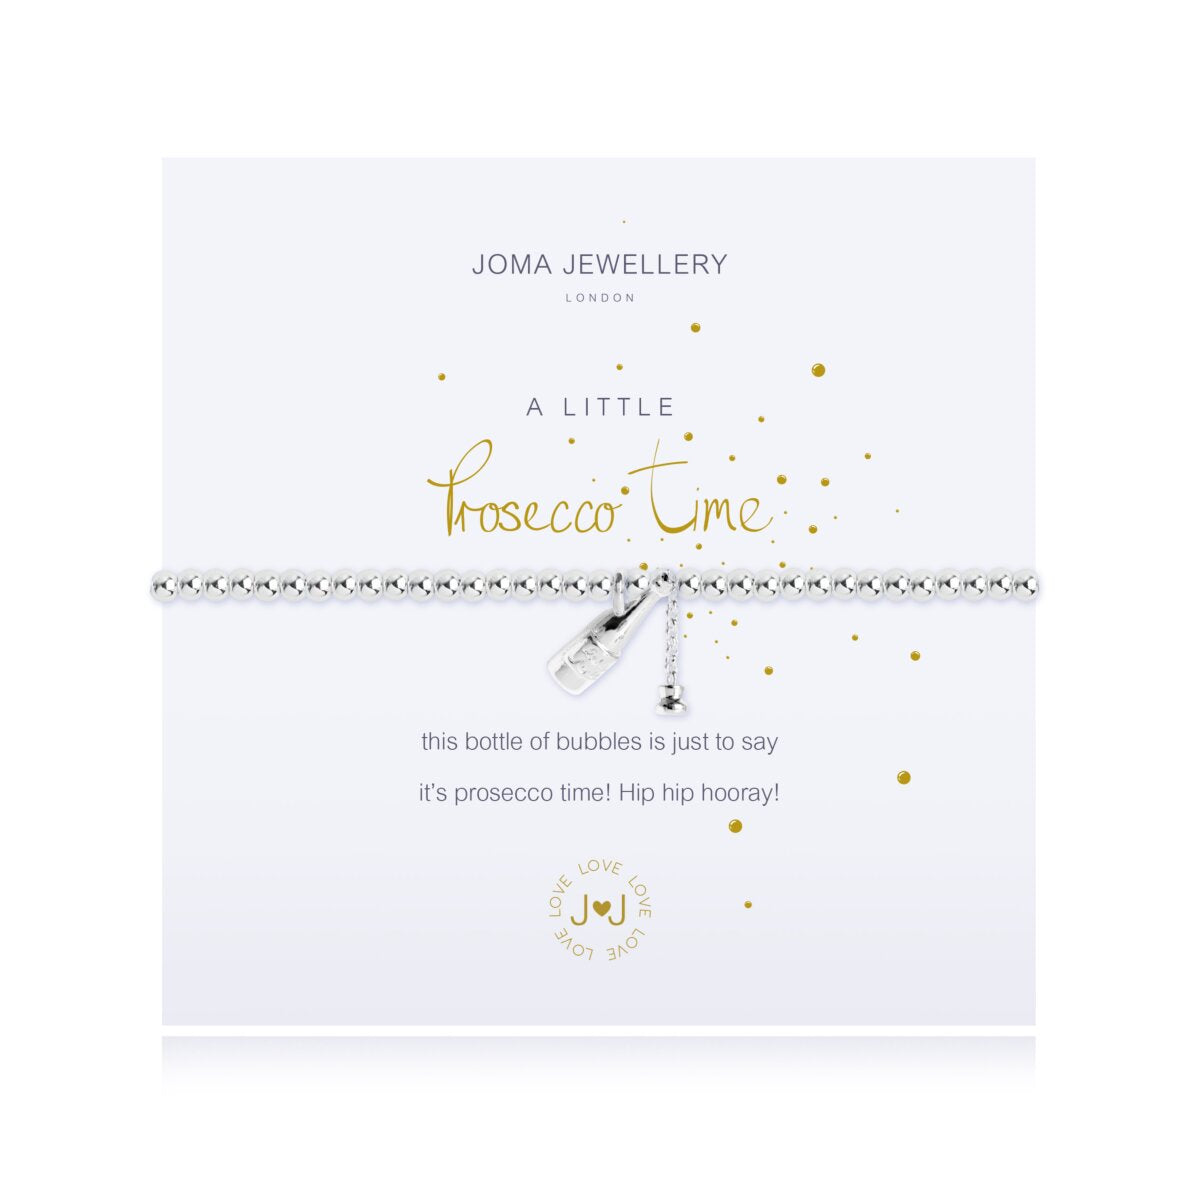 Joma Jewellery 'A Little' Prosecco Time